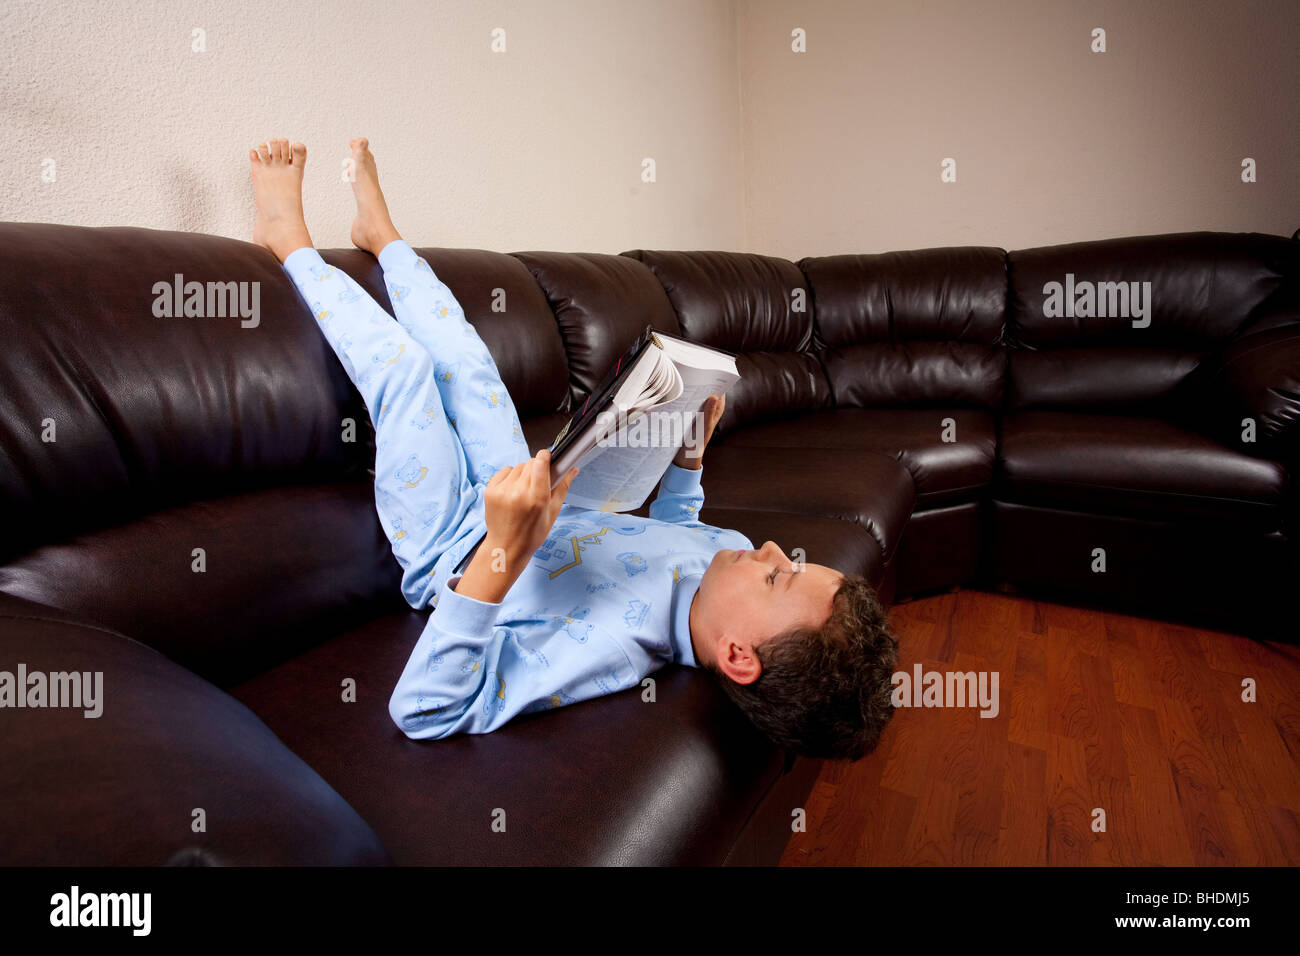 Мужчина лежит нога на ногу. На диване вверх ногами. Человек лежит на диване. Лежать на диване вверх ногами.